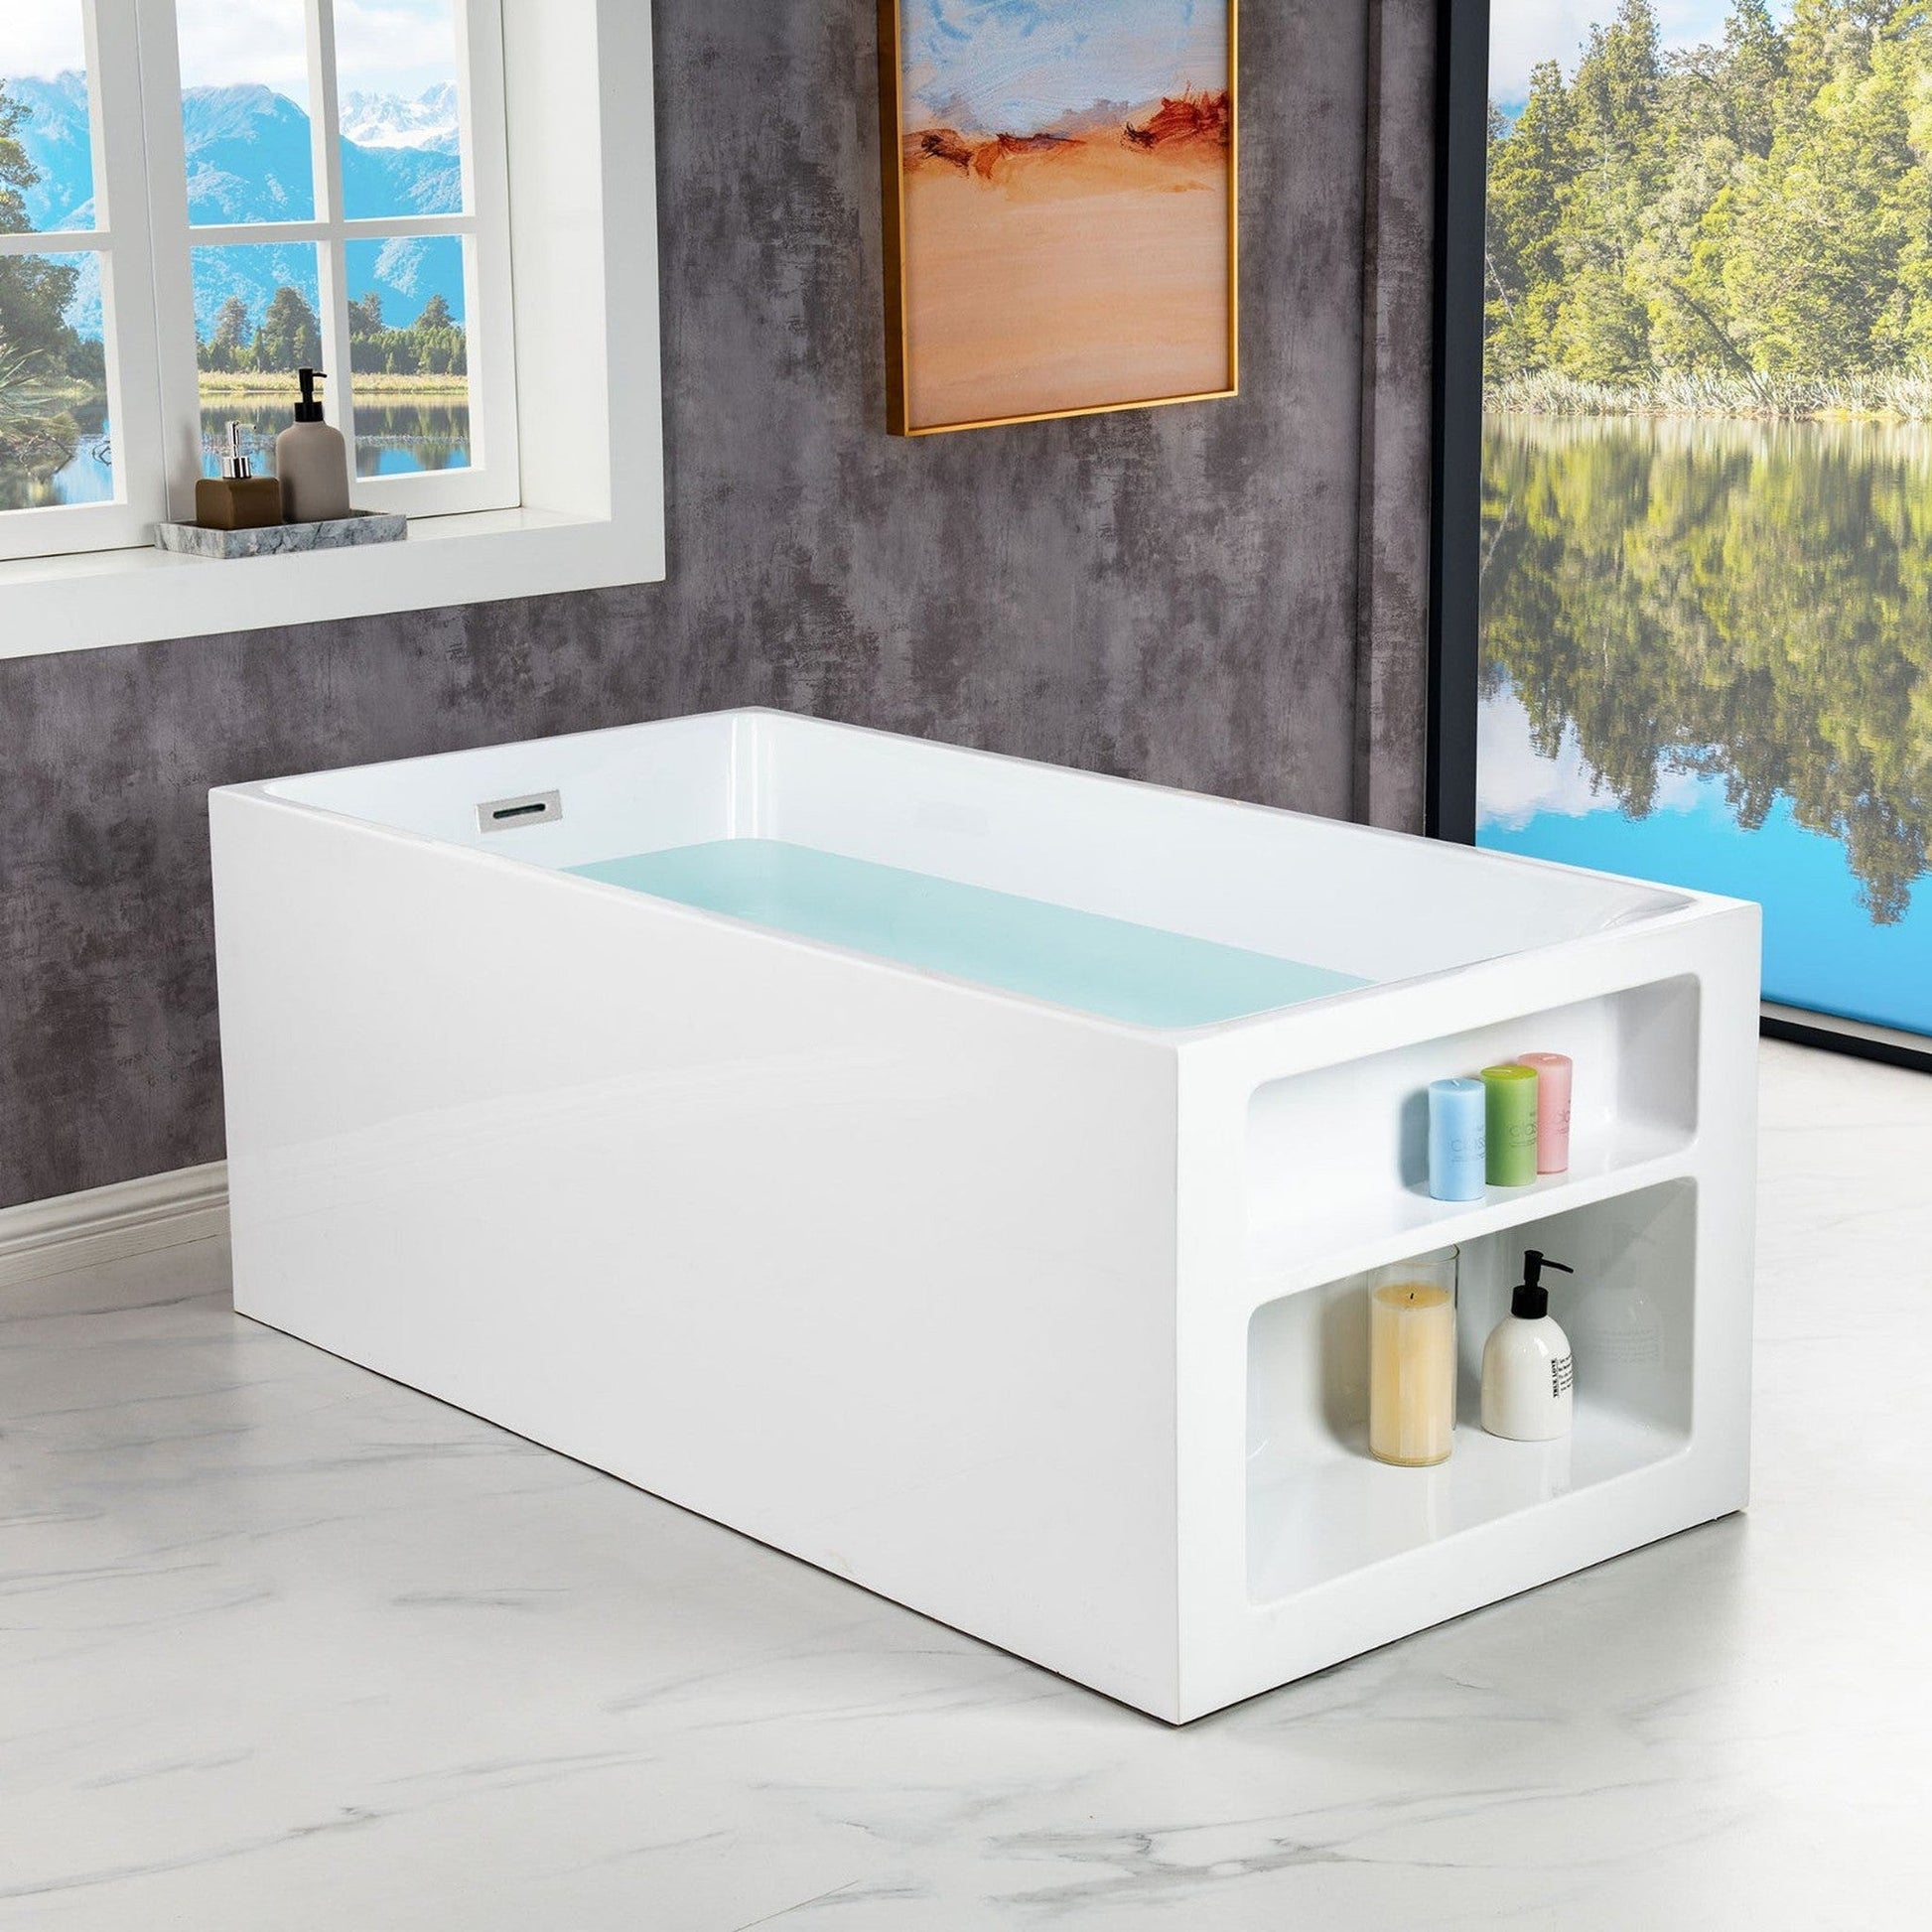 WoodBridge BTA0081 59" White Acrylic Freestanding Soaking Bathtub With Chrome Overflow and Drain